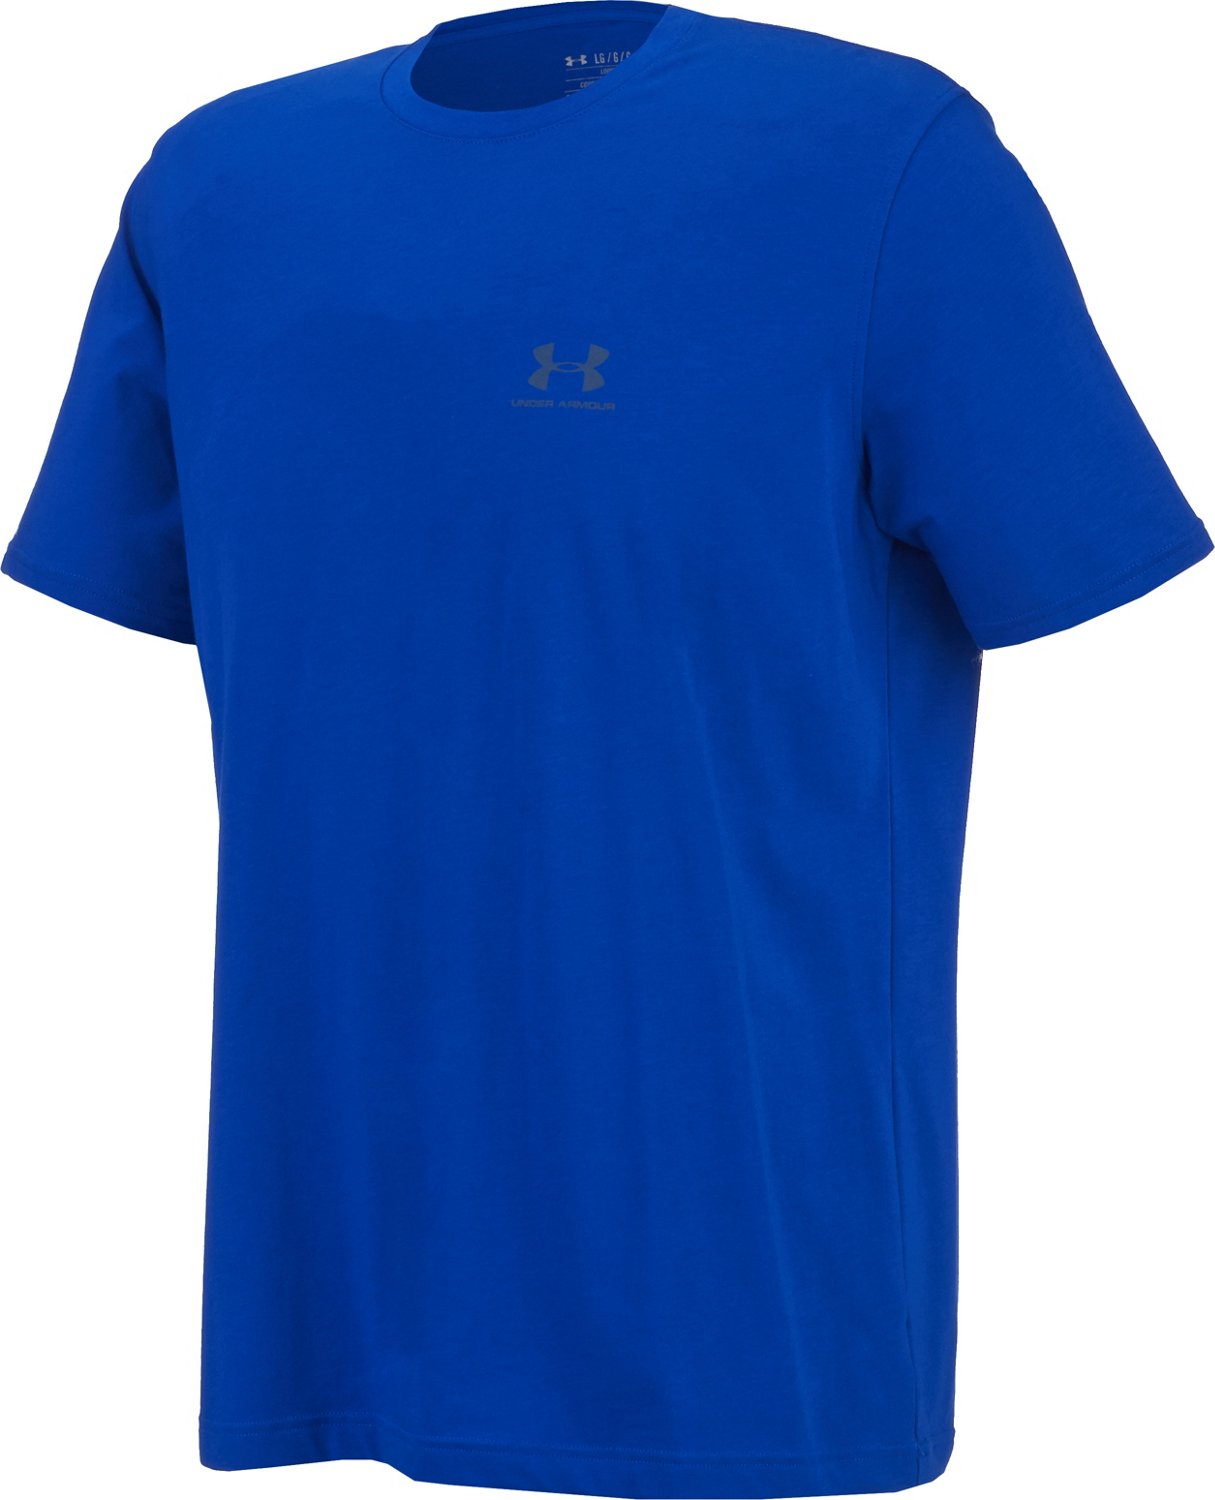 Men's Shirts & T-Shirts | Long Sleeve, Short Sleeve, Mens Polo Shirts